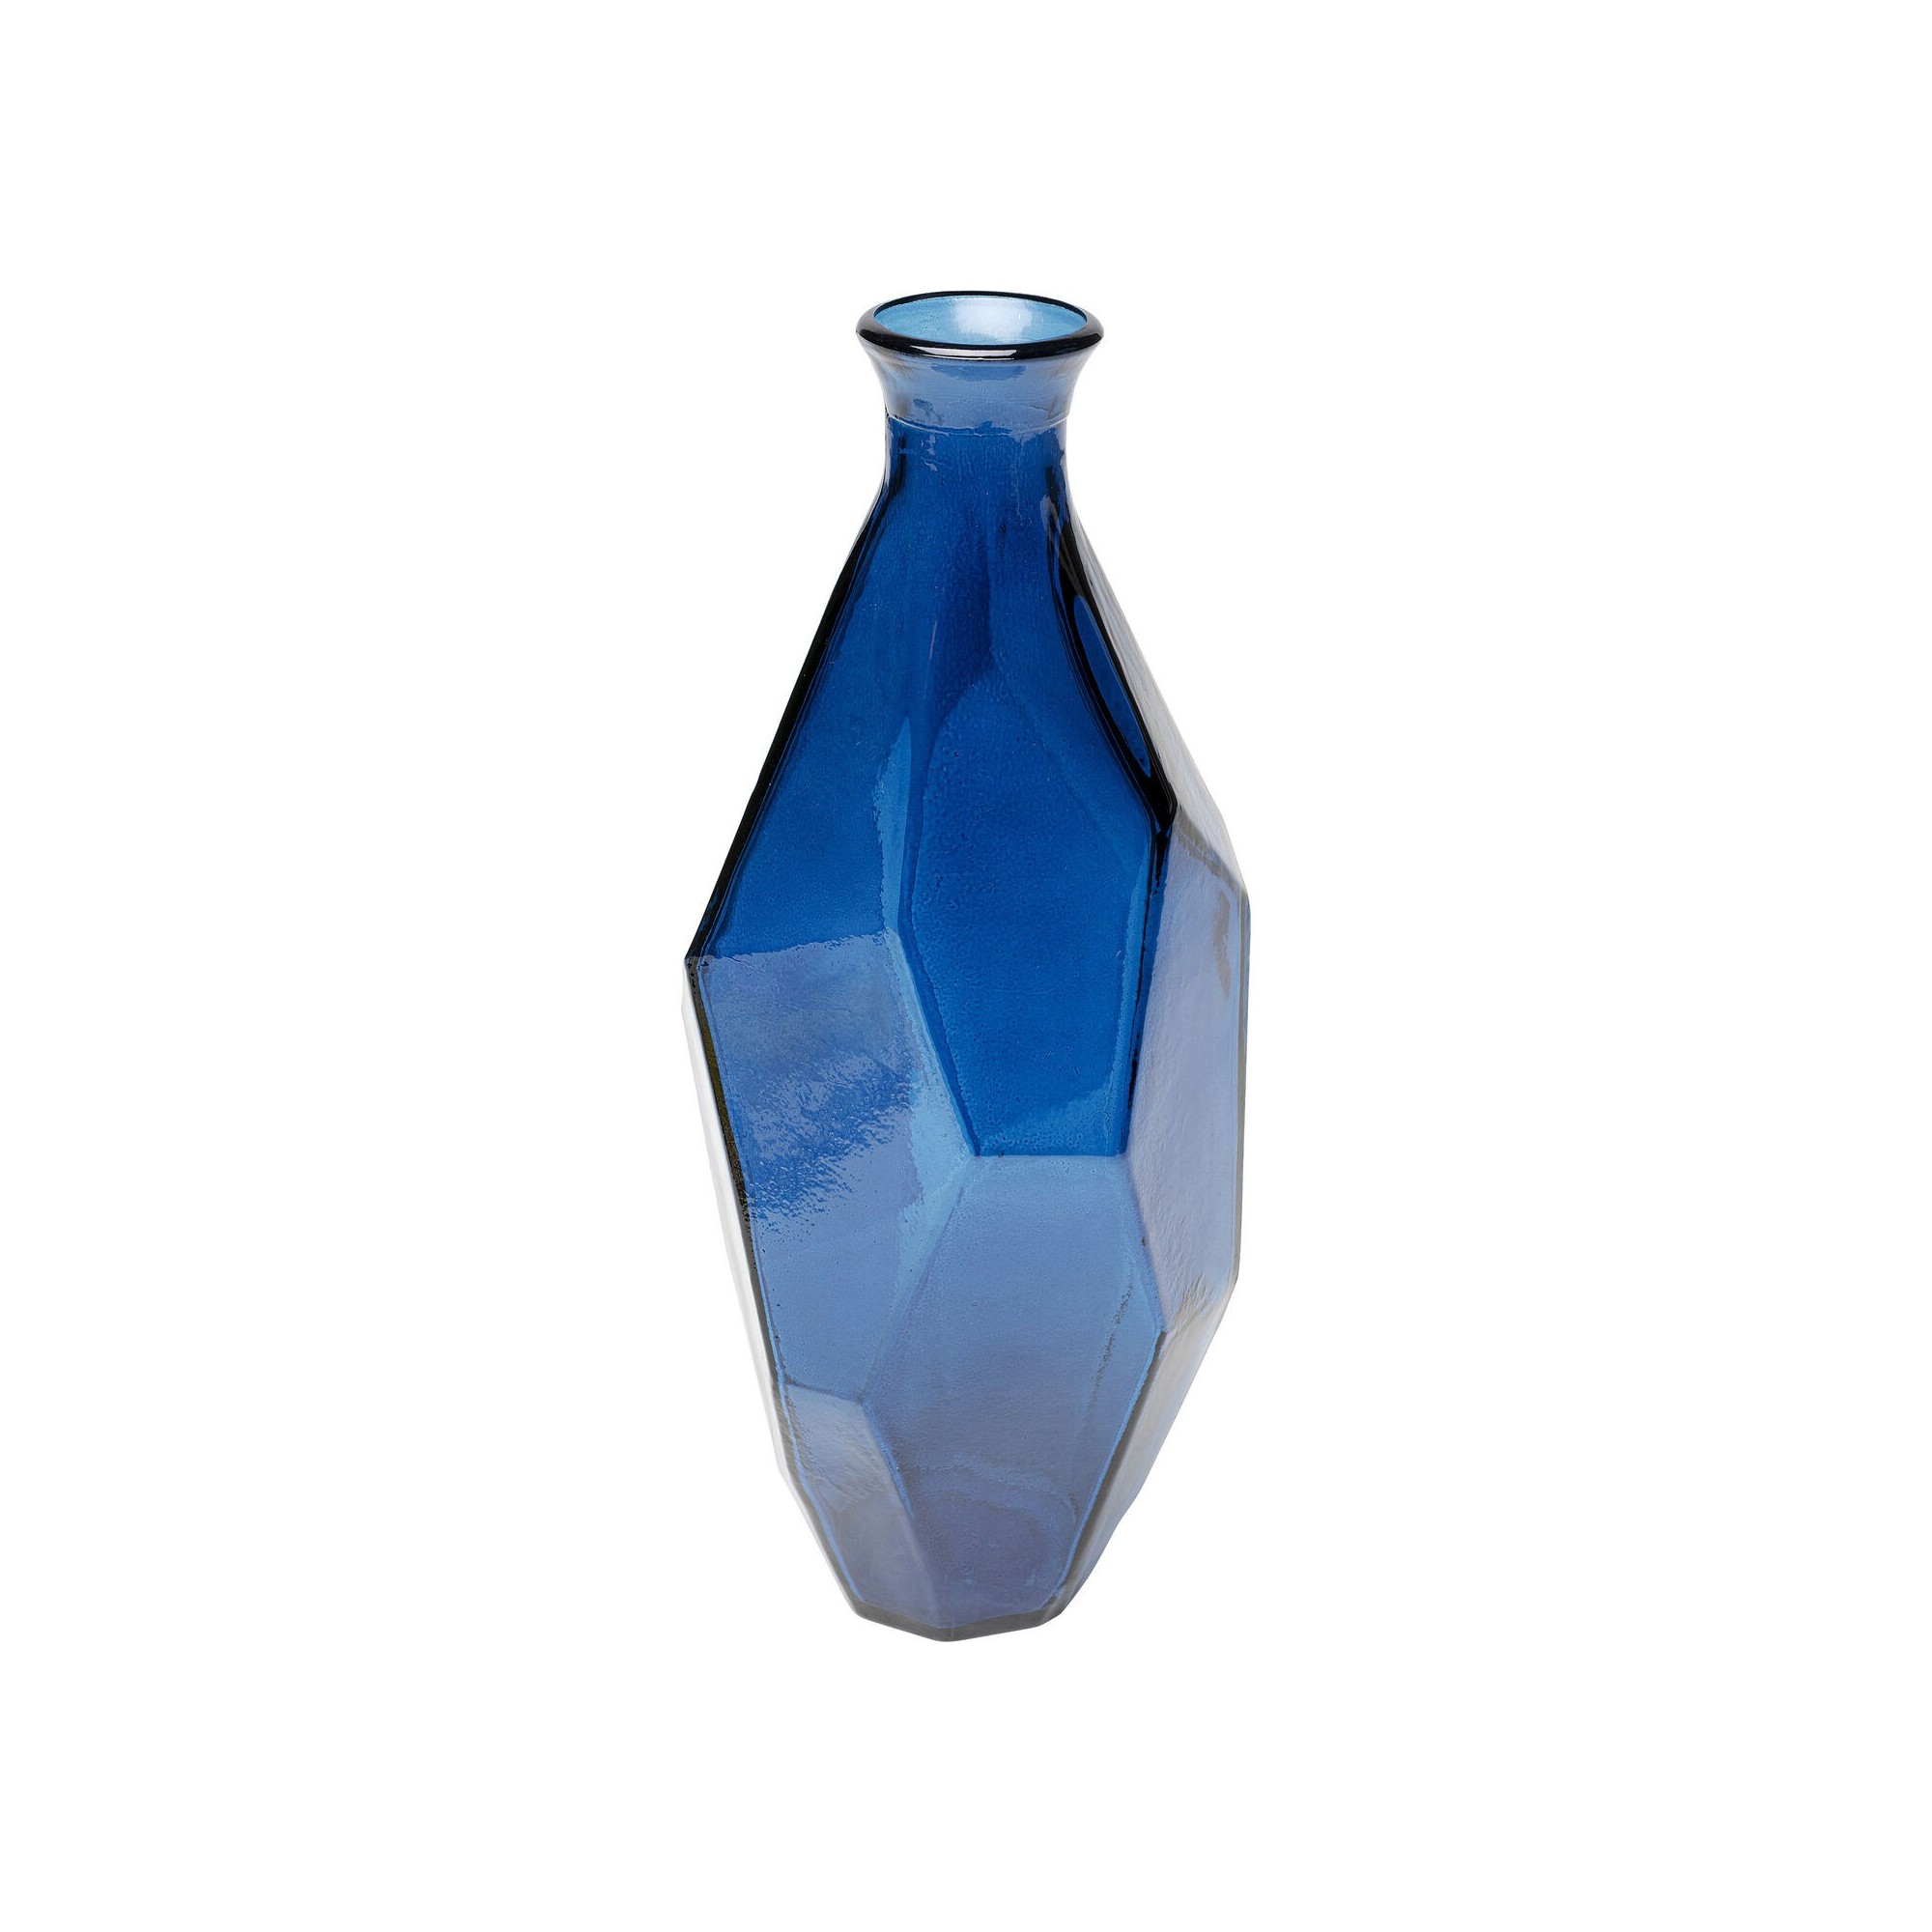 Vase Origami bleu 31cm Kare Design